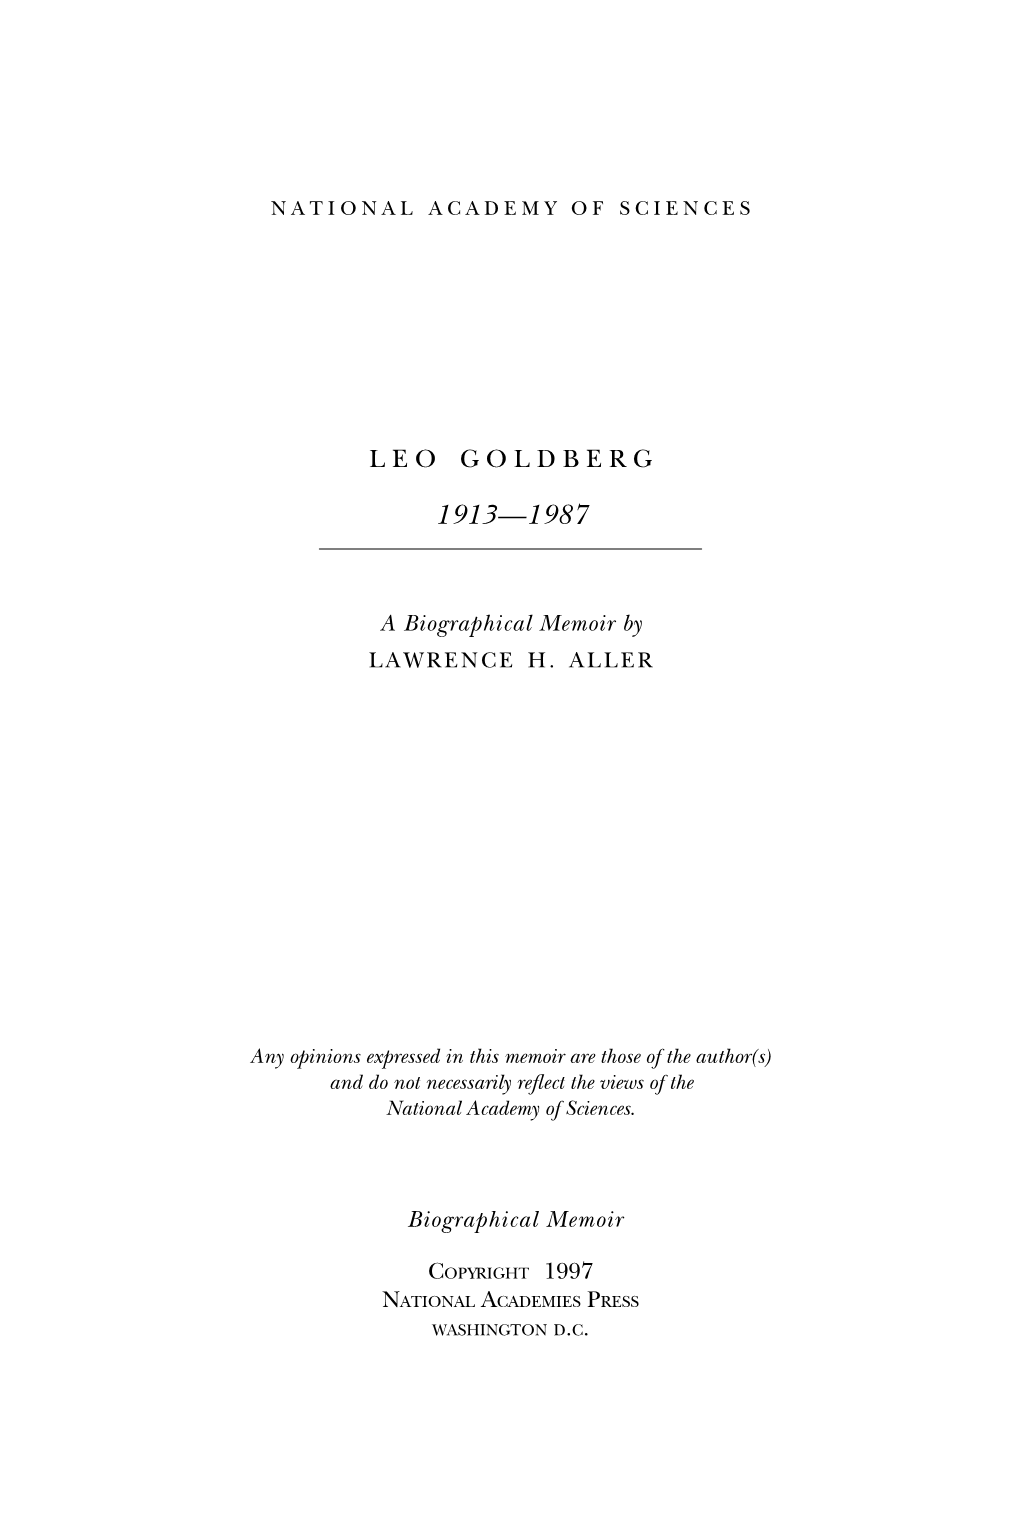 LEO GOLDBERG January 26, 1913–November 1, 1987